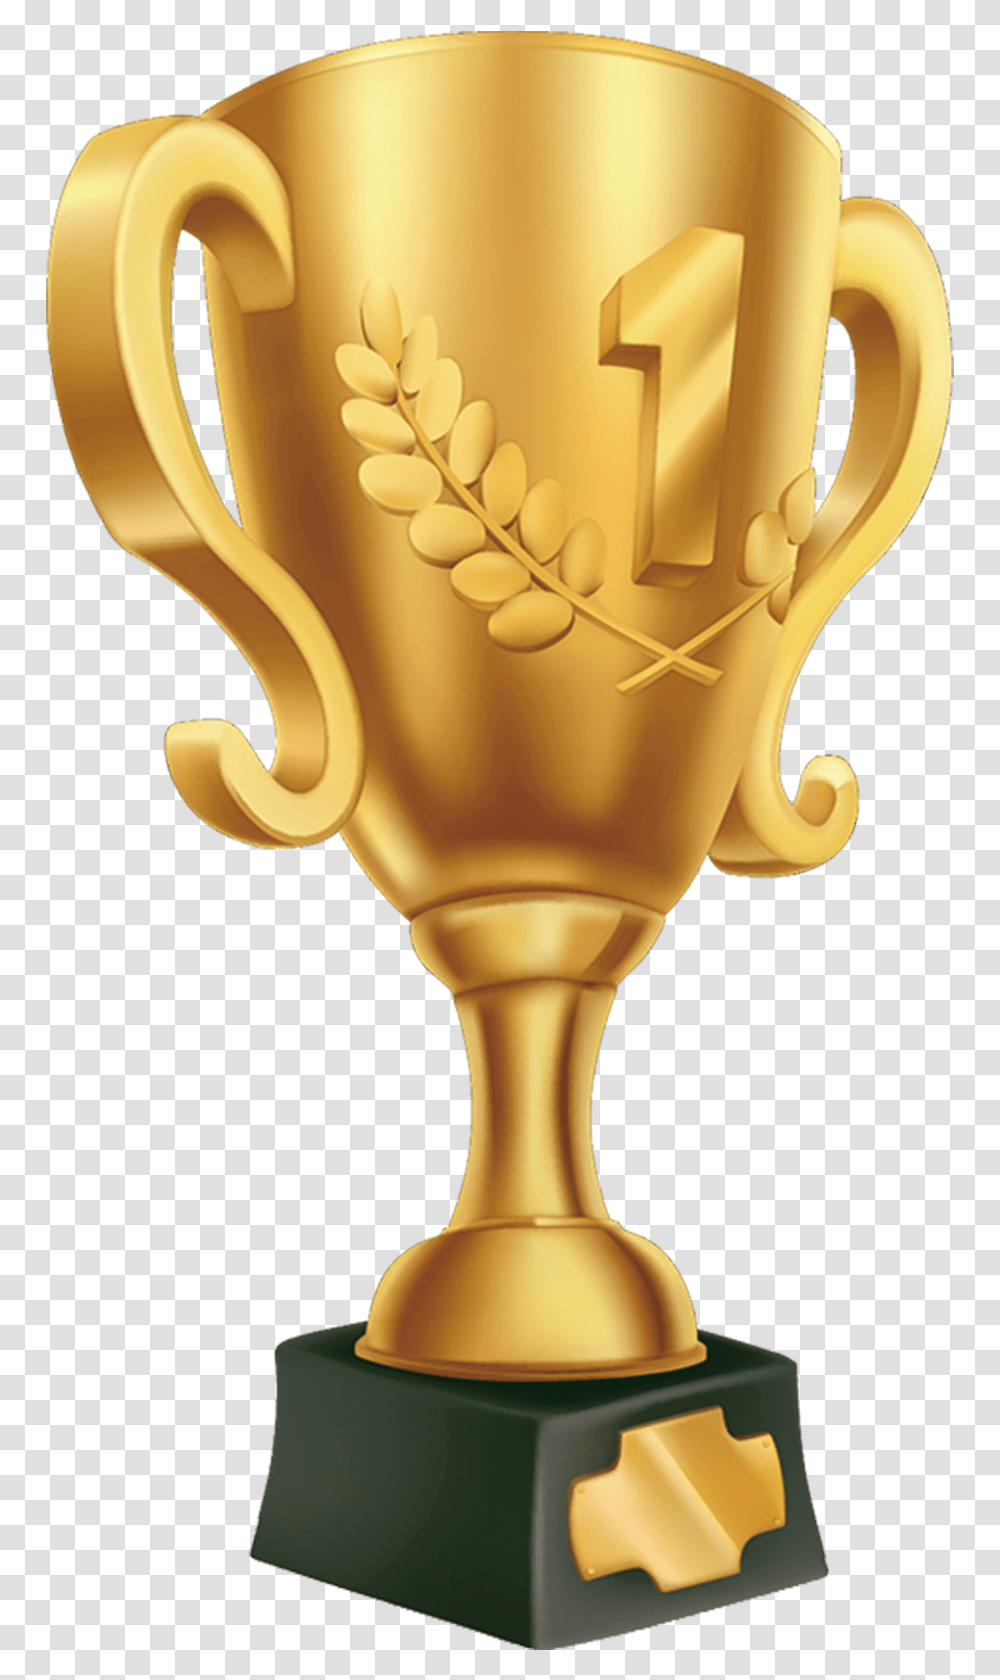 Golden Trophy Image Free Download Searchpngcom Number One Trophy, Lamp Transparent Png